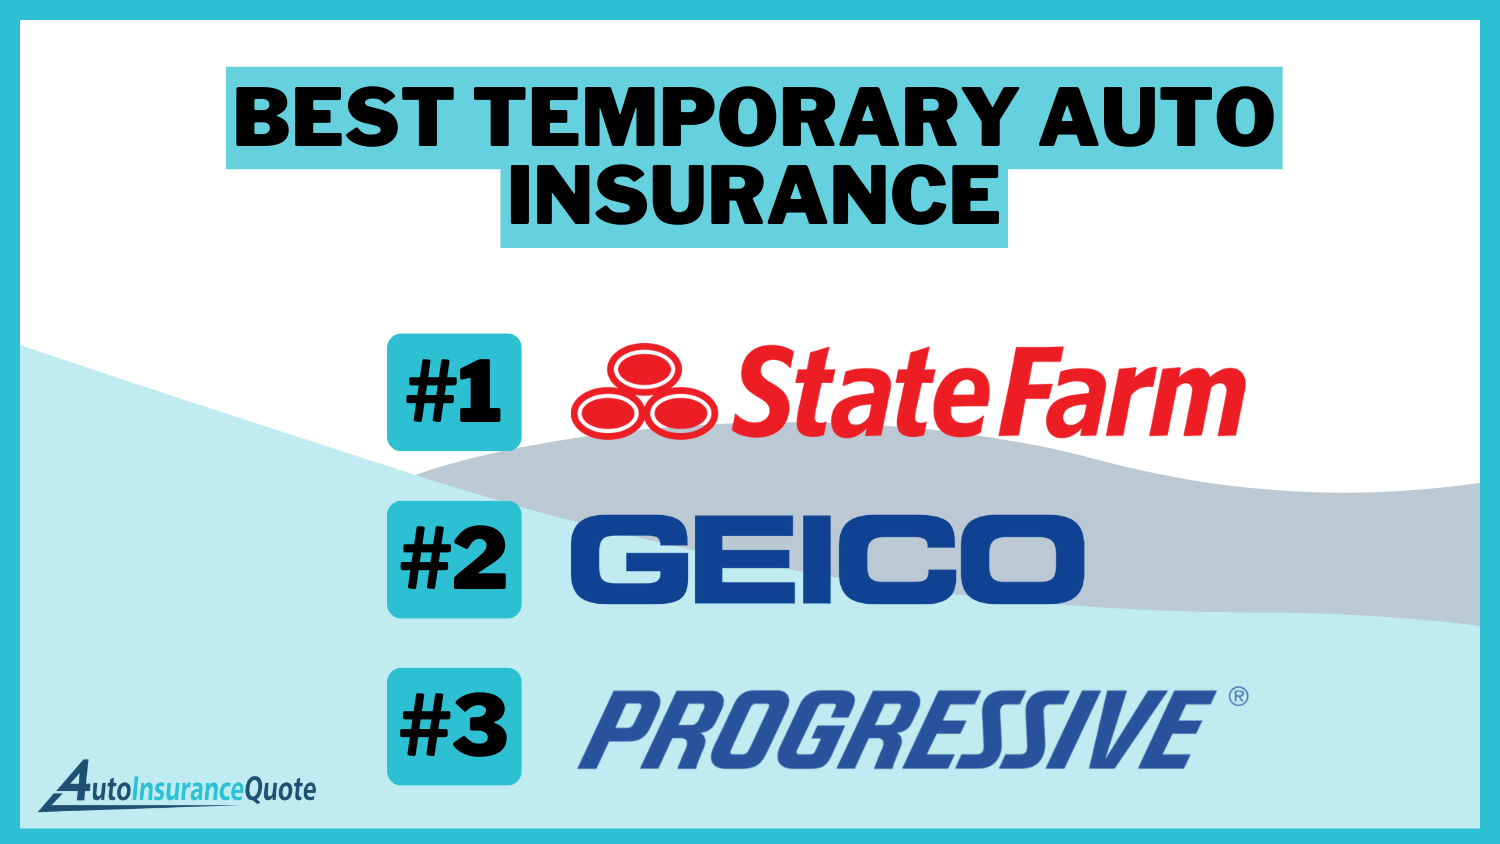 Best Temporary Auto Insurance: State Farm, Geico, and Progressive